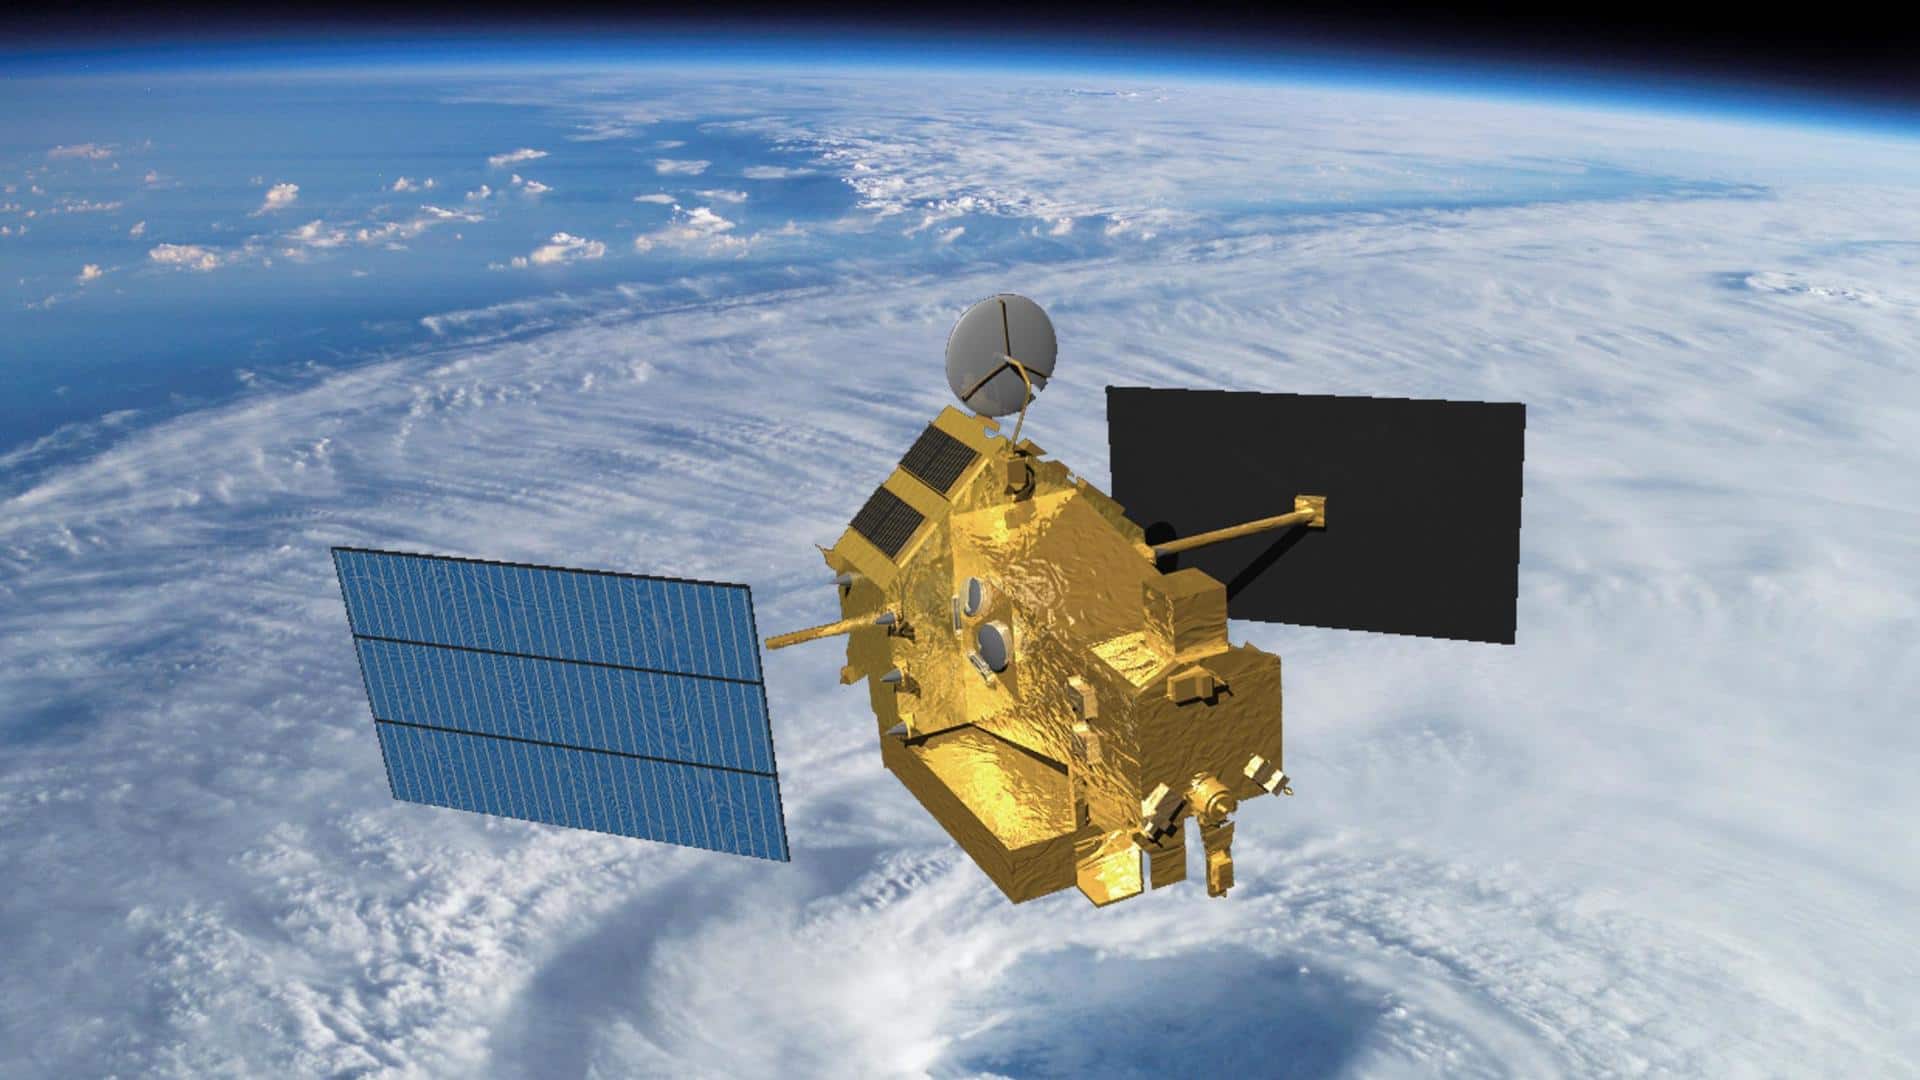 NASA's latest satellites will help track hurricanes better: Here's how